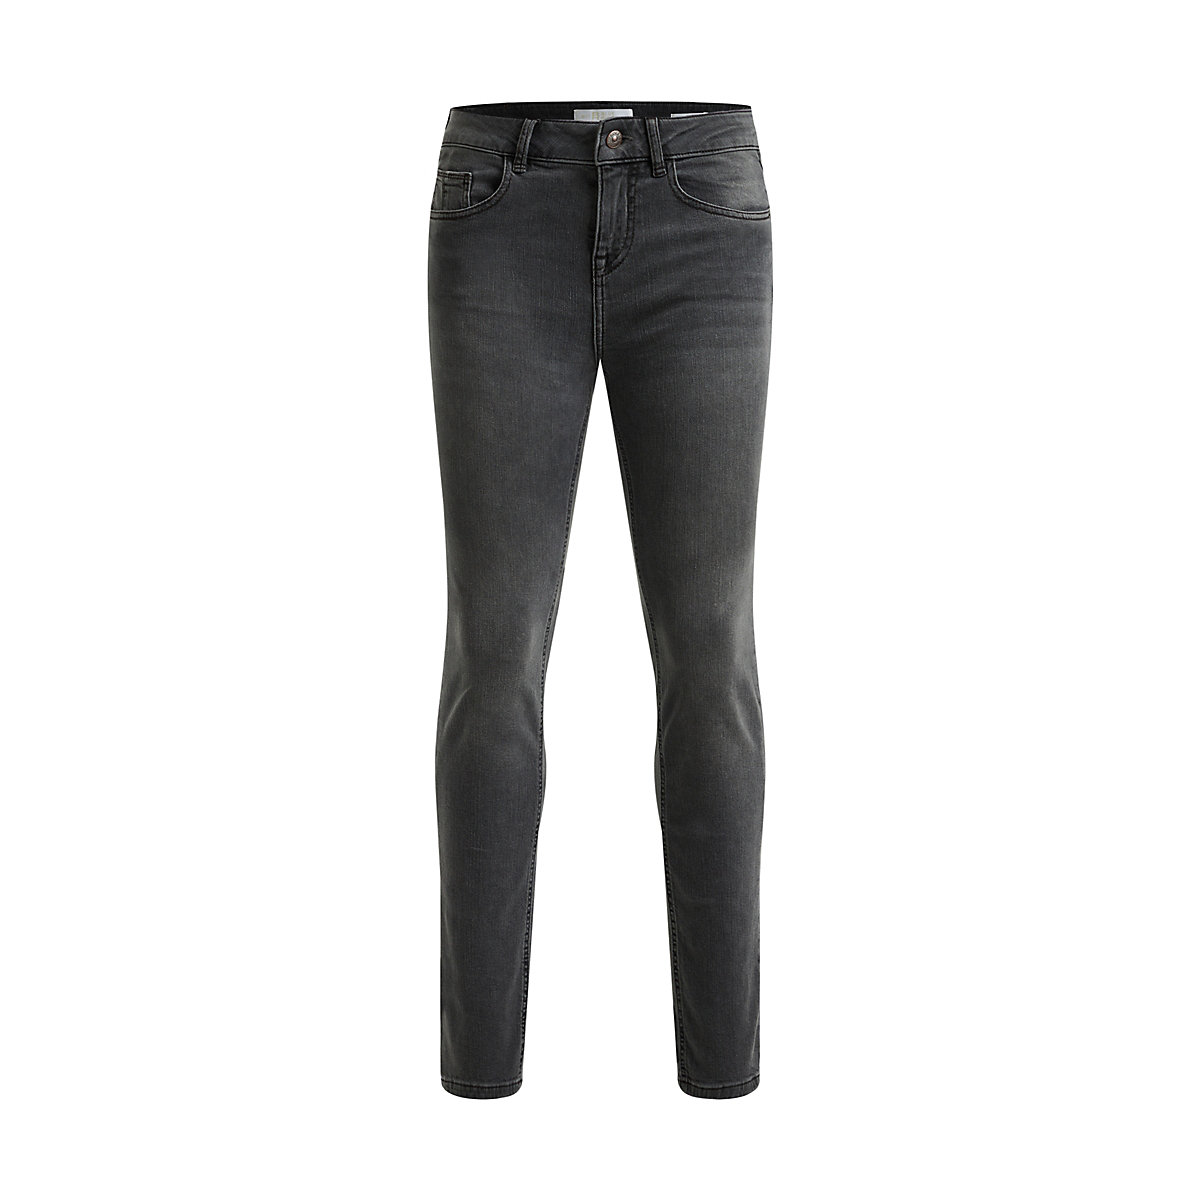 WE Fashion Damen-Slim-Fit-Jeans mit normaler Bundhöhe Curve Jeanshosen grau